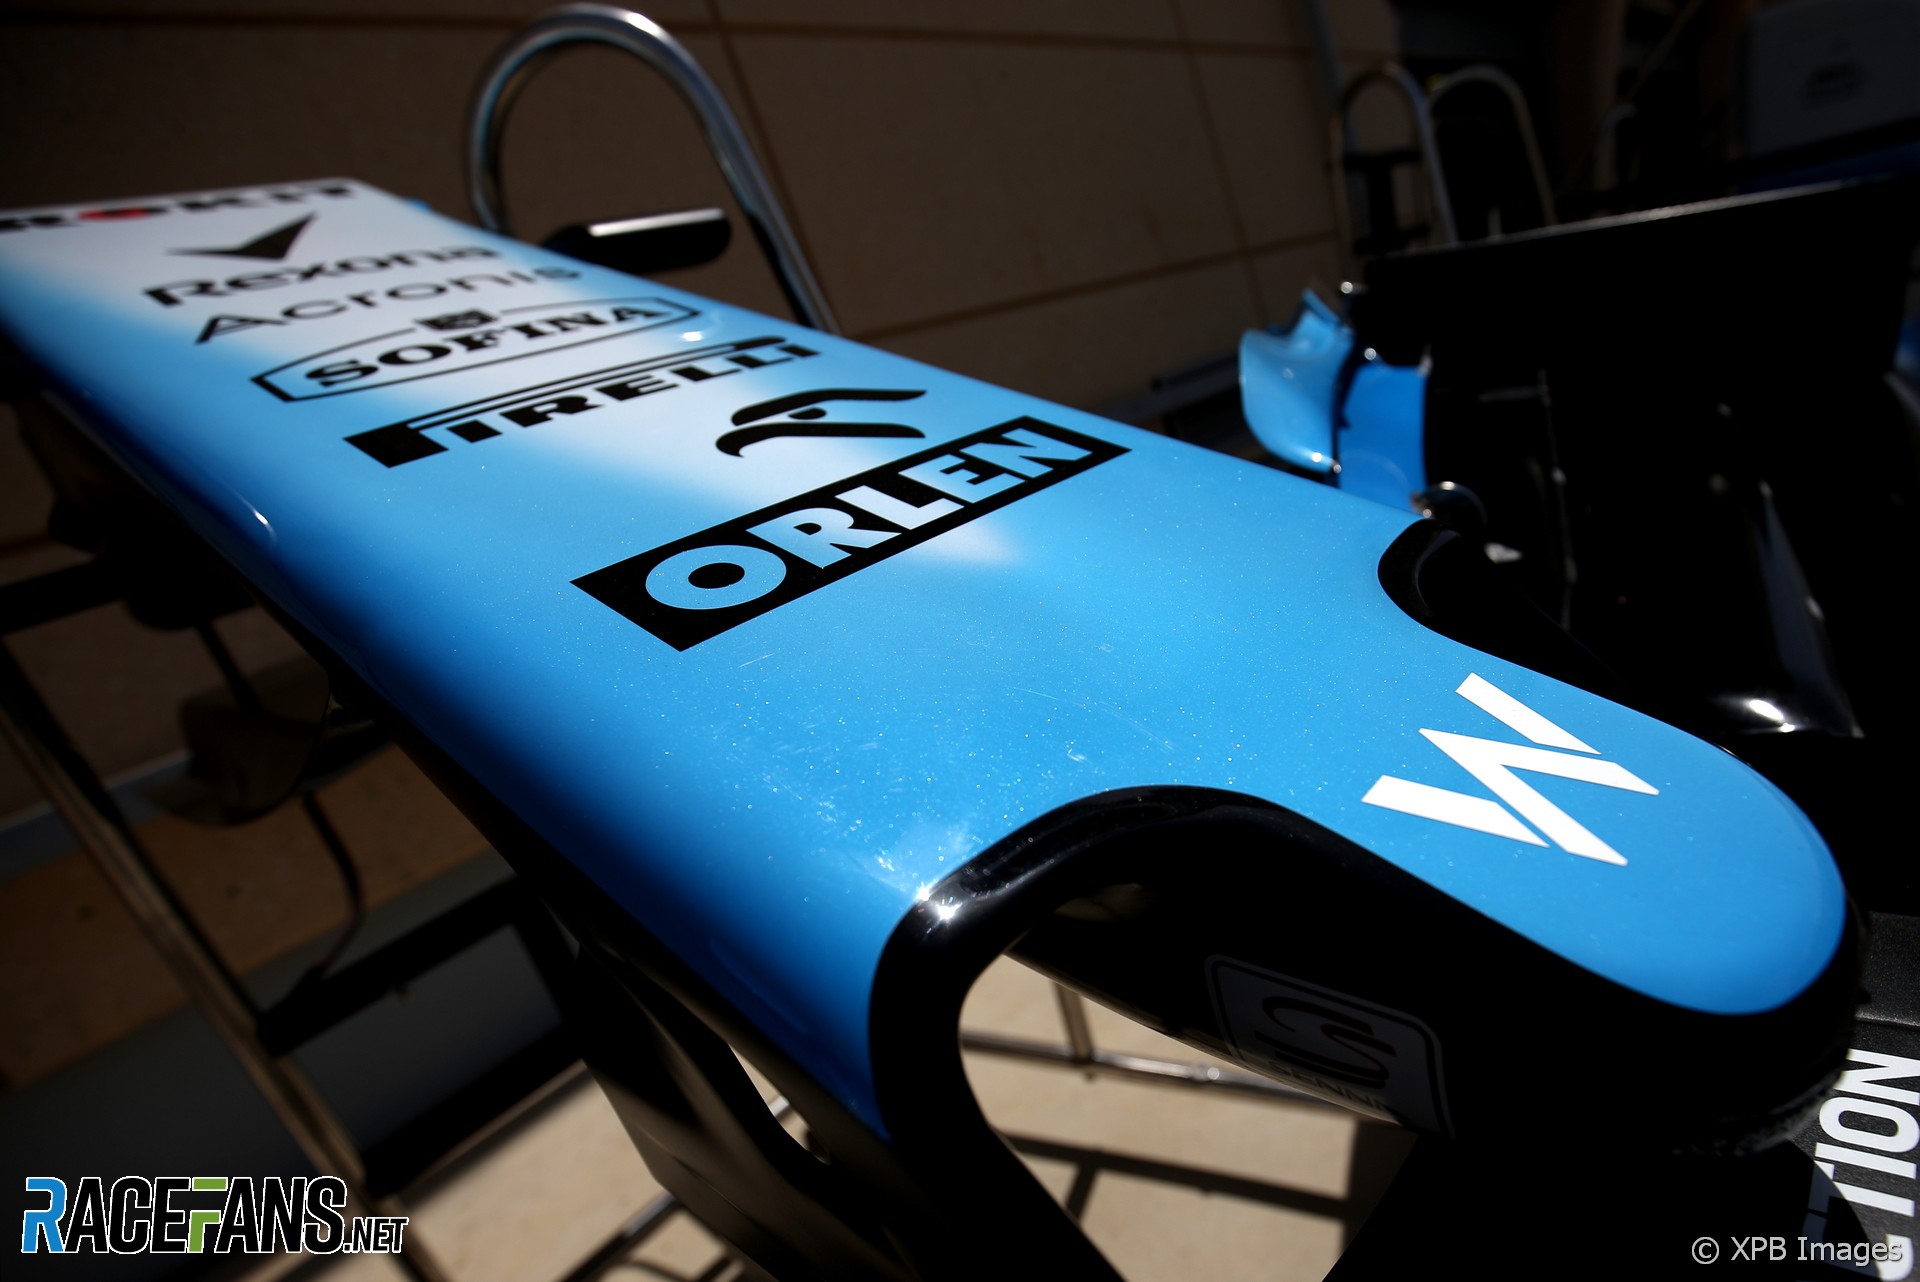 Williams, Bahrain International Circuit, 2019